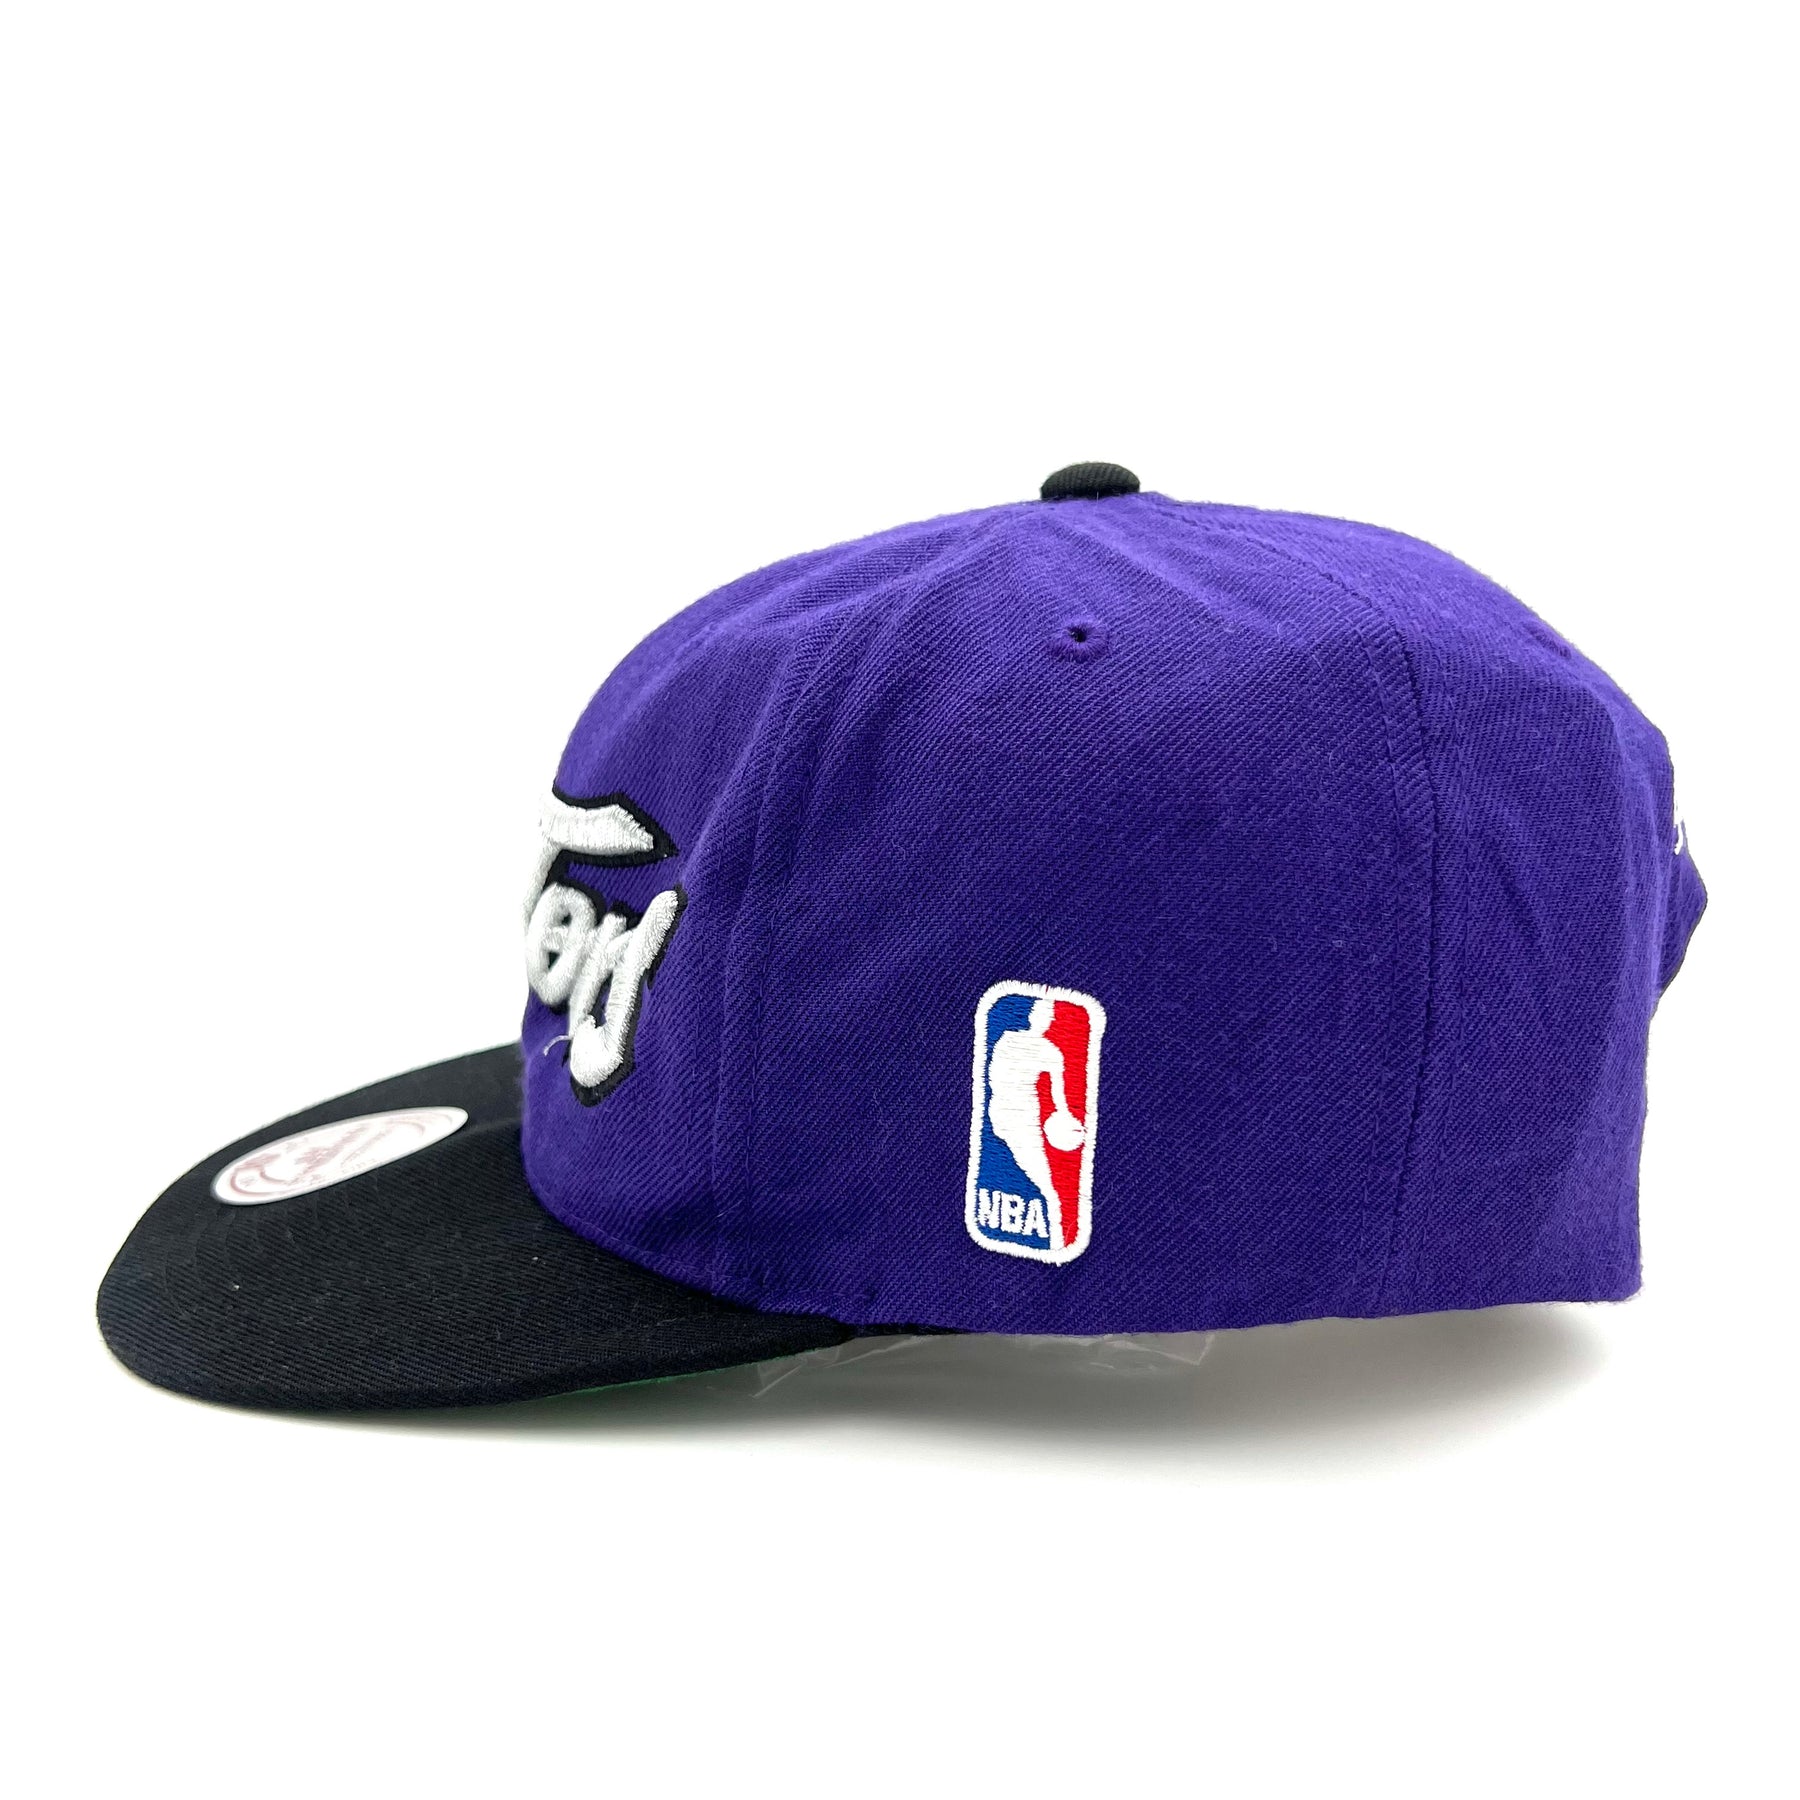 NBA Toronto Raptors Snap-Back Hat - Adult OSFA